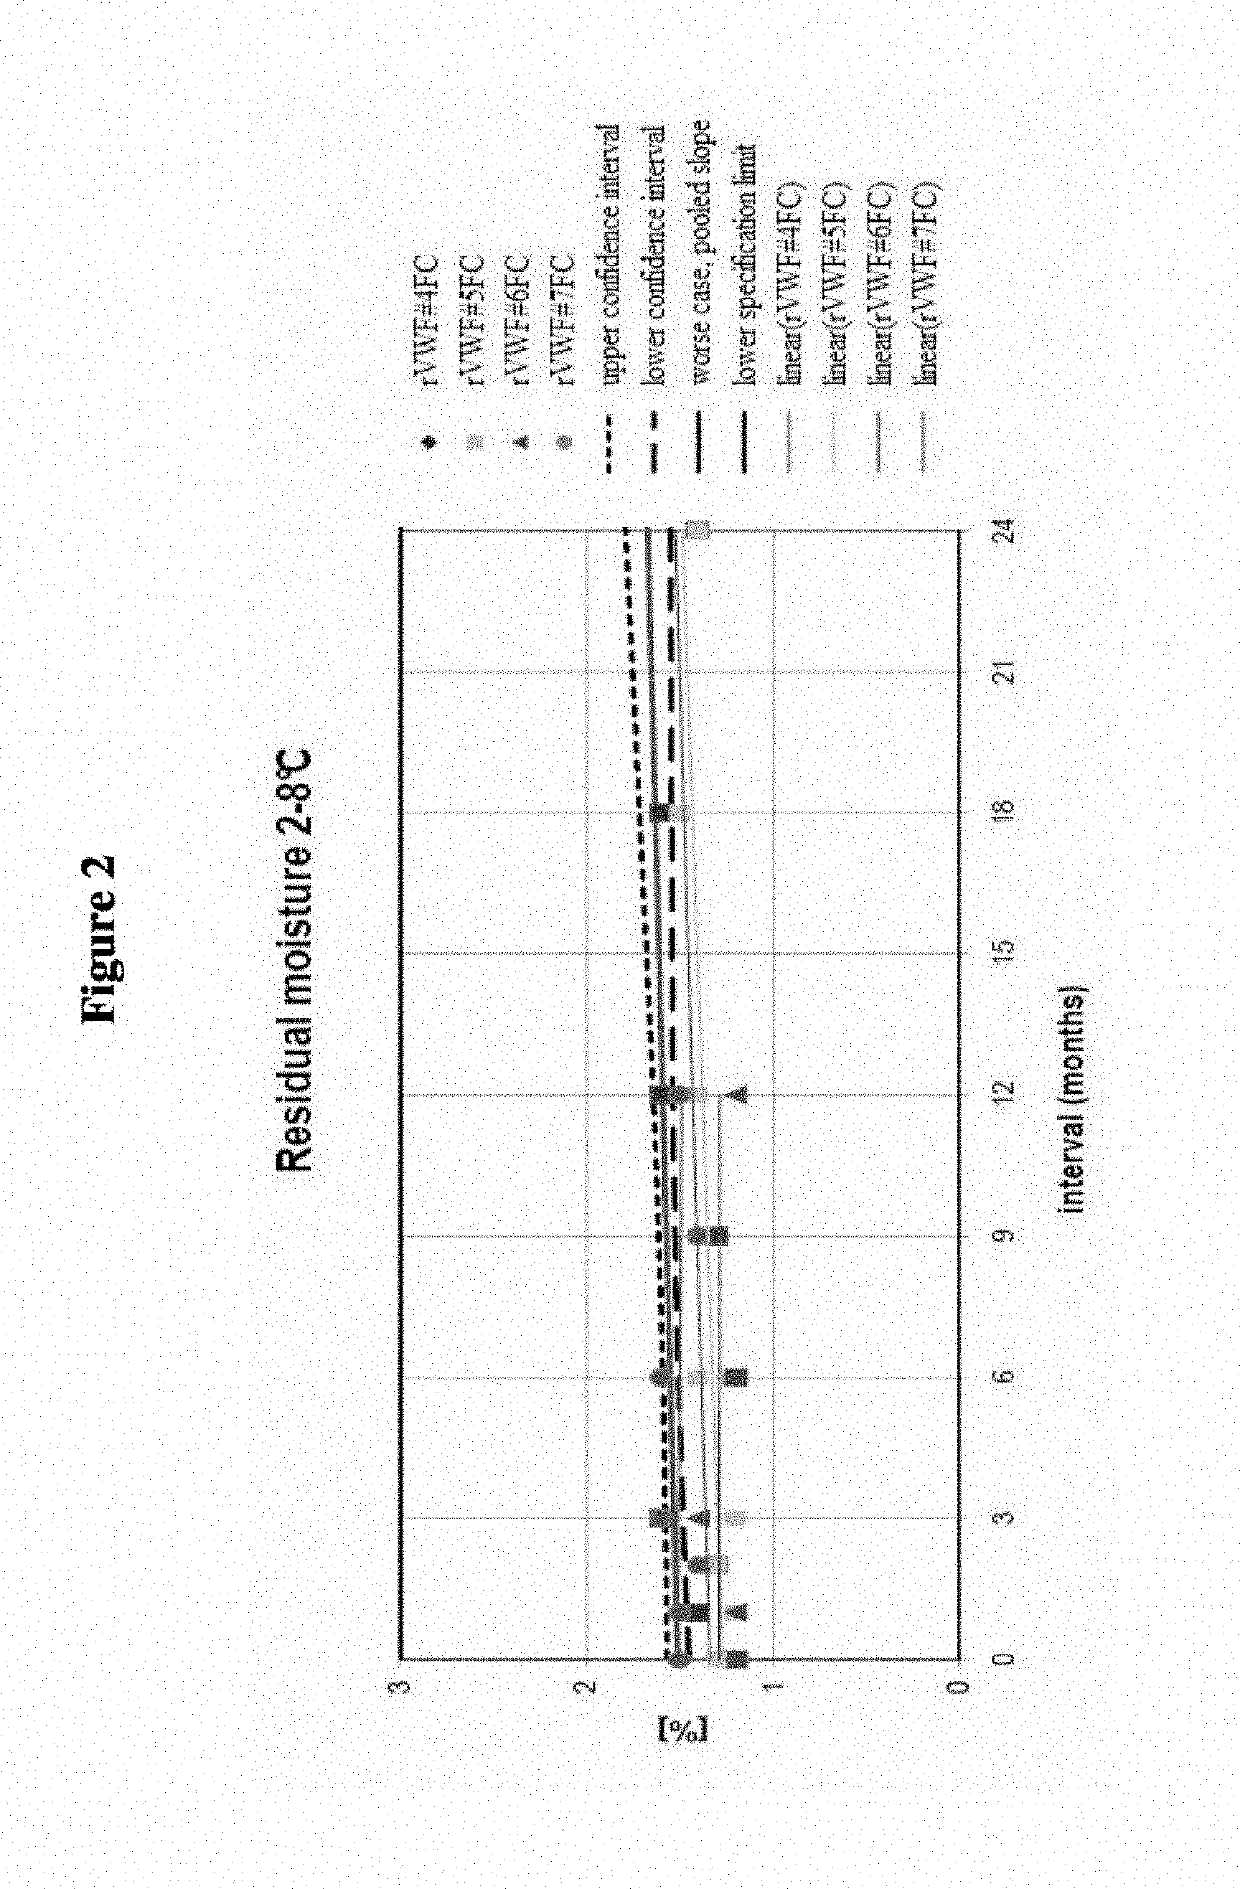 Lyophilized recombinant vwf formulations